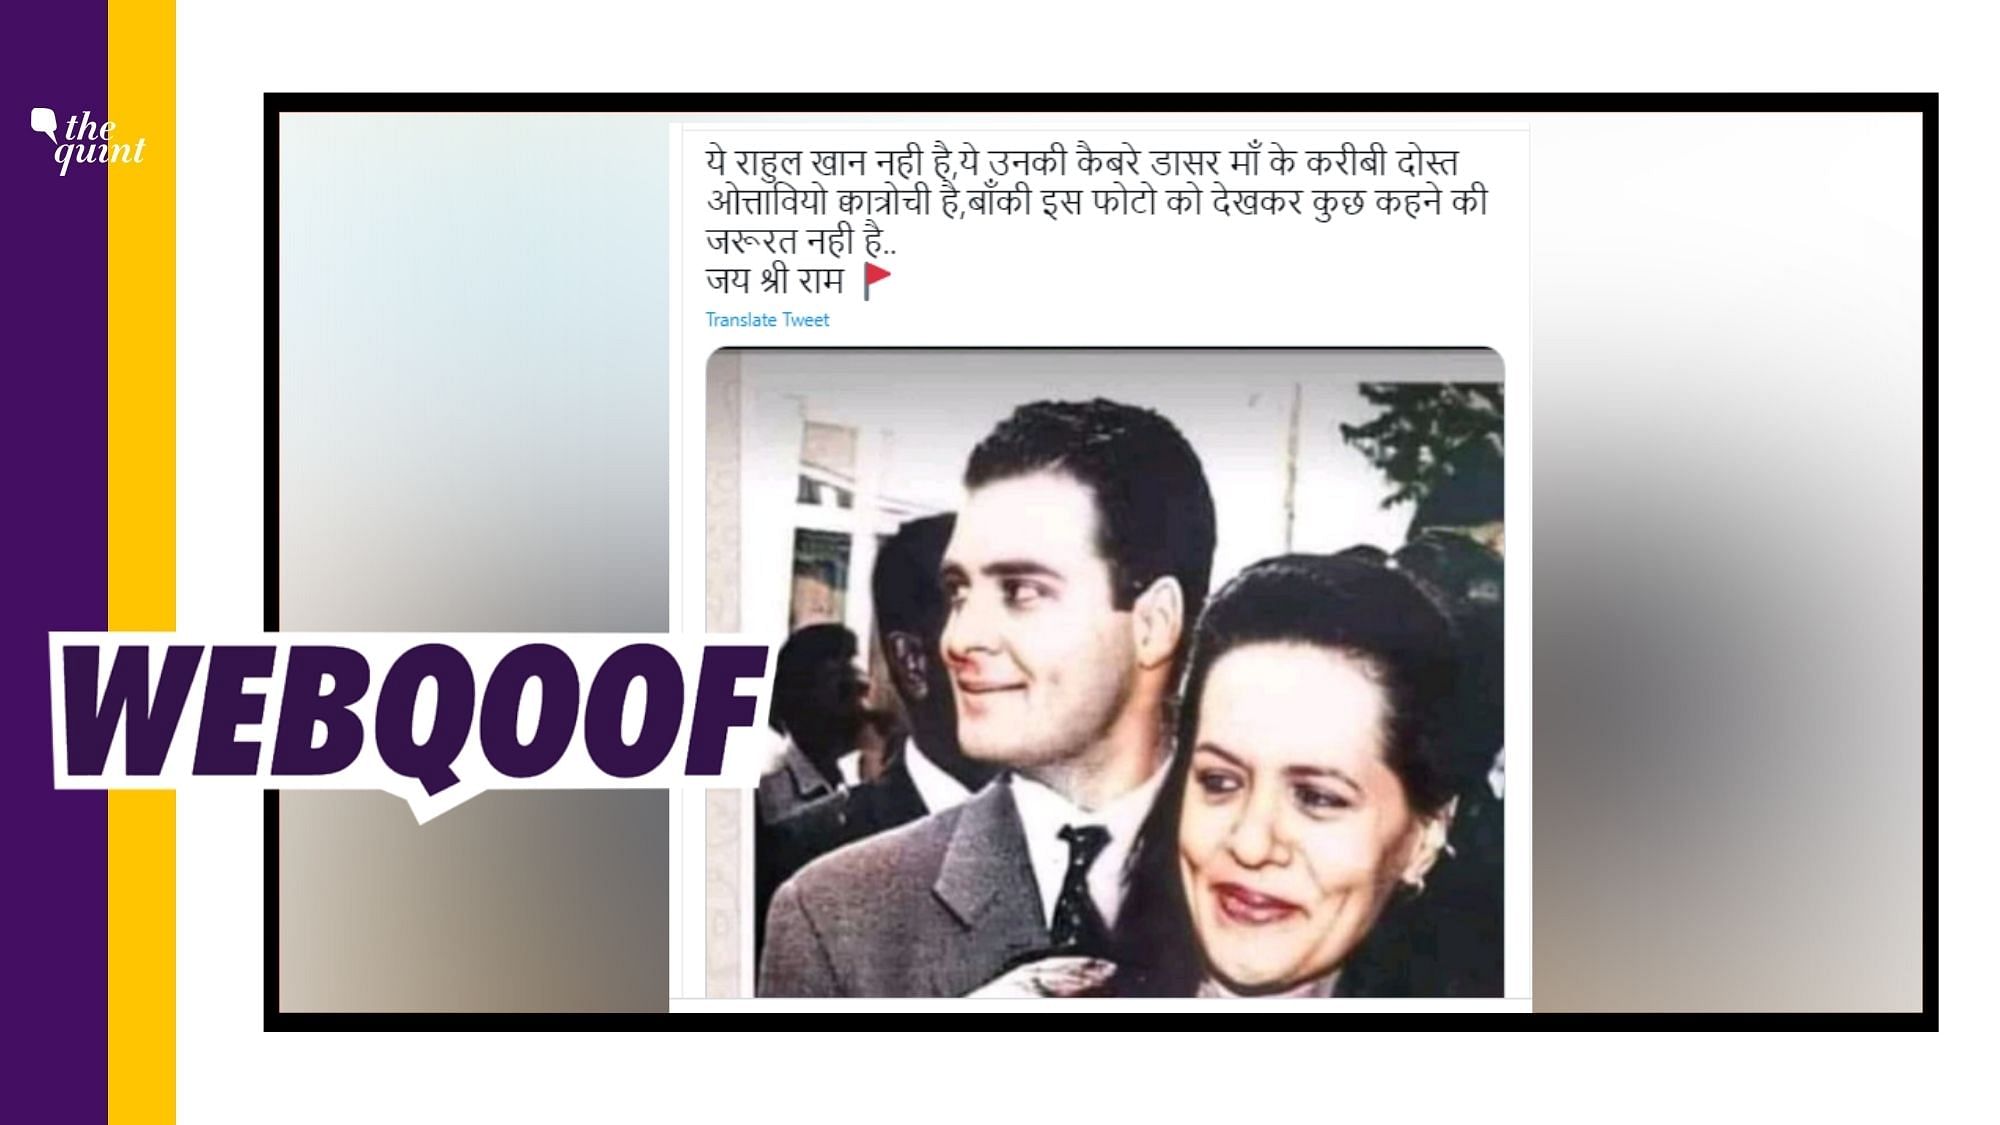 <div class="paragraphs"><p>The photo shows Sonia Gandhi with Rahul Gandhi at an event in New Delhi, not Ottavio Quattrocchi.</p></div>